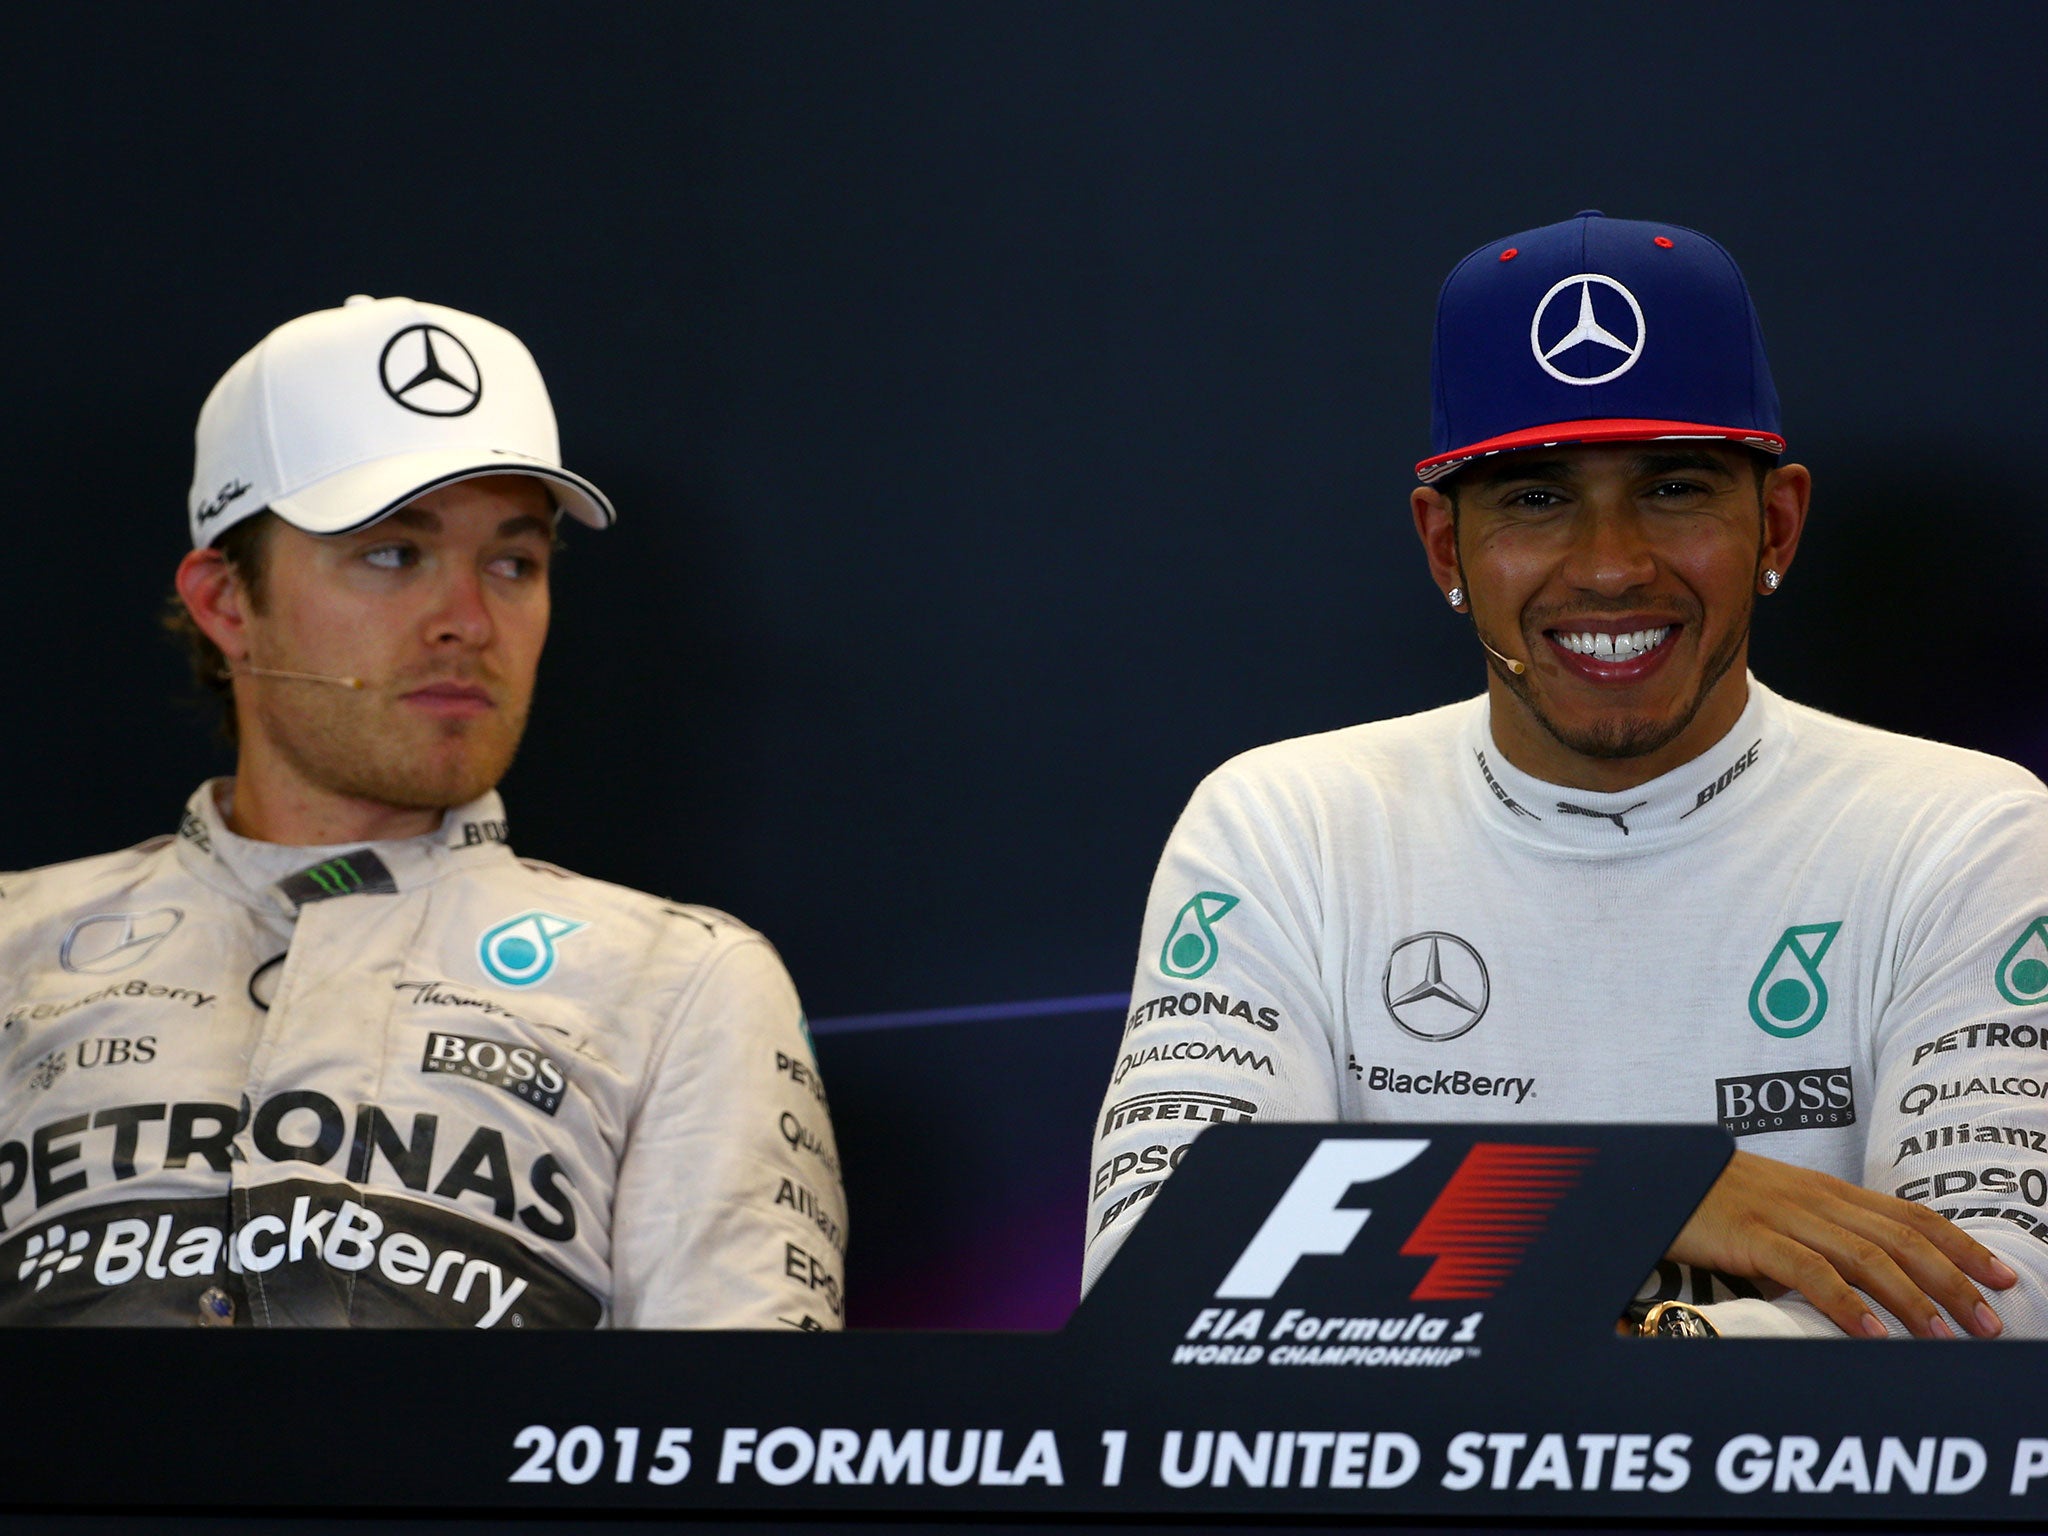 Nico Rosberg glares at Lewis Hamilton after the US Grand Prix